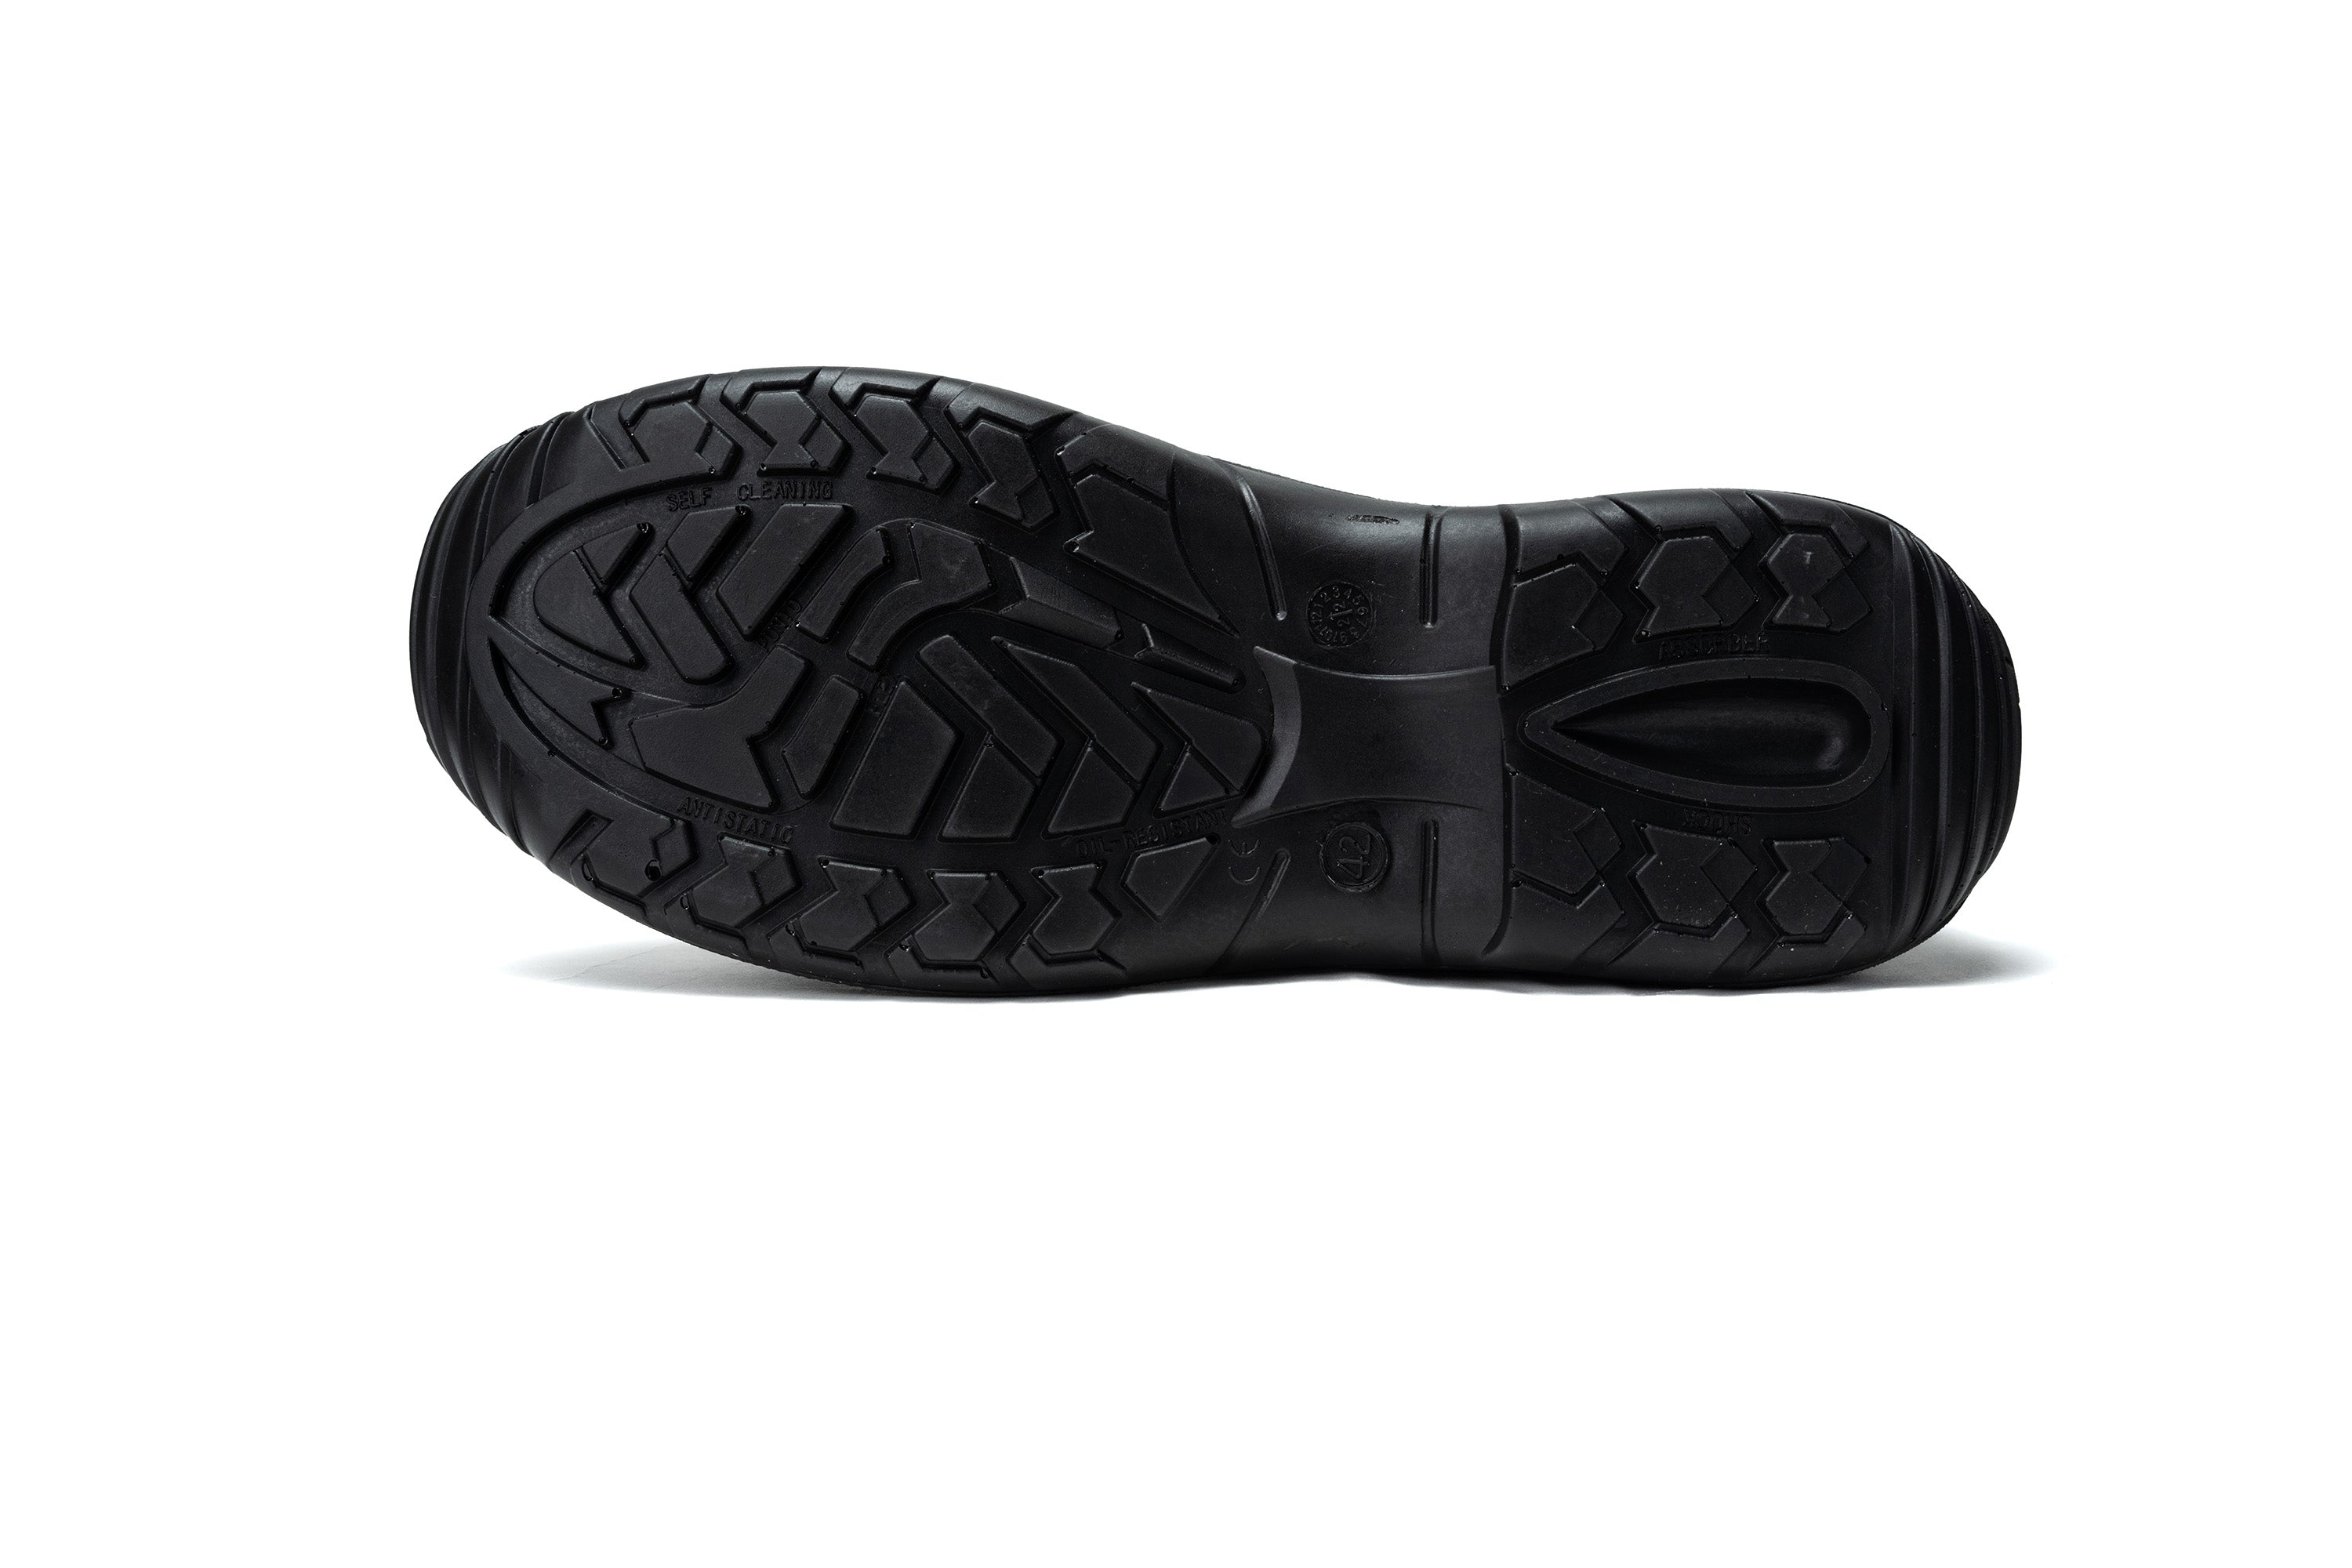 Safety Boots (Composite Safety Toes & Soles)-FAST-BK-EU Size: 38-偉豐鞋 WELL SHOE HK-Well Shoe-偉豐鞋-偉豐網-荃灣鞋店-Functional shoes-Hong Kong Tsuen Wan Shoe Store-Tai Wan Shoe-Japan Shoe-高品質功能鞋-台灣進口鞋-日本進口鞋-High-quality shoes-鞋類配件-荃灣進口鞋-香港鞋店-優質鞋類產品-水靴-帆布鞋-廚師鞋-香港鞋品牌-Hong Kong Shoes brand-長者鞋-Hong Kong Rain Boots-Kitchen shoes-Cruthes-Slipper-Well Shoe Hong Kong-Anello-Arriba-休閒鞋-舒適鞋-健康鞋-皮鞋-Healthy shoes-Leather shoes-Hiking shoes